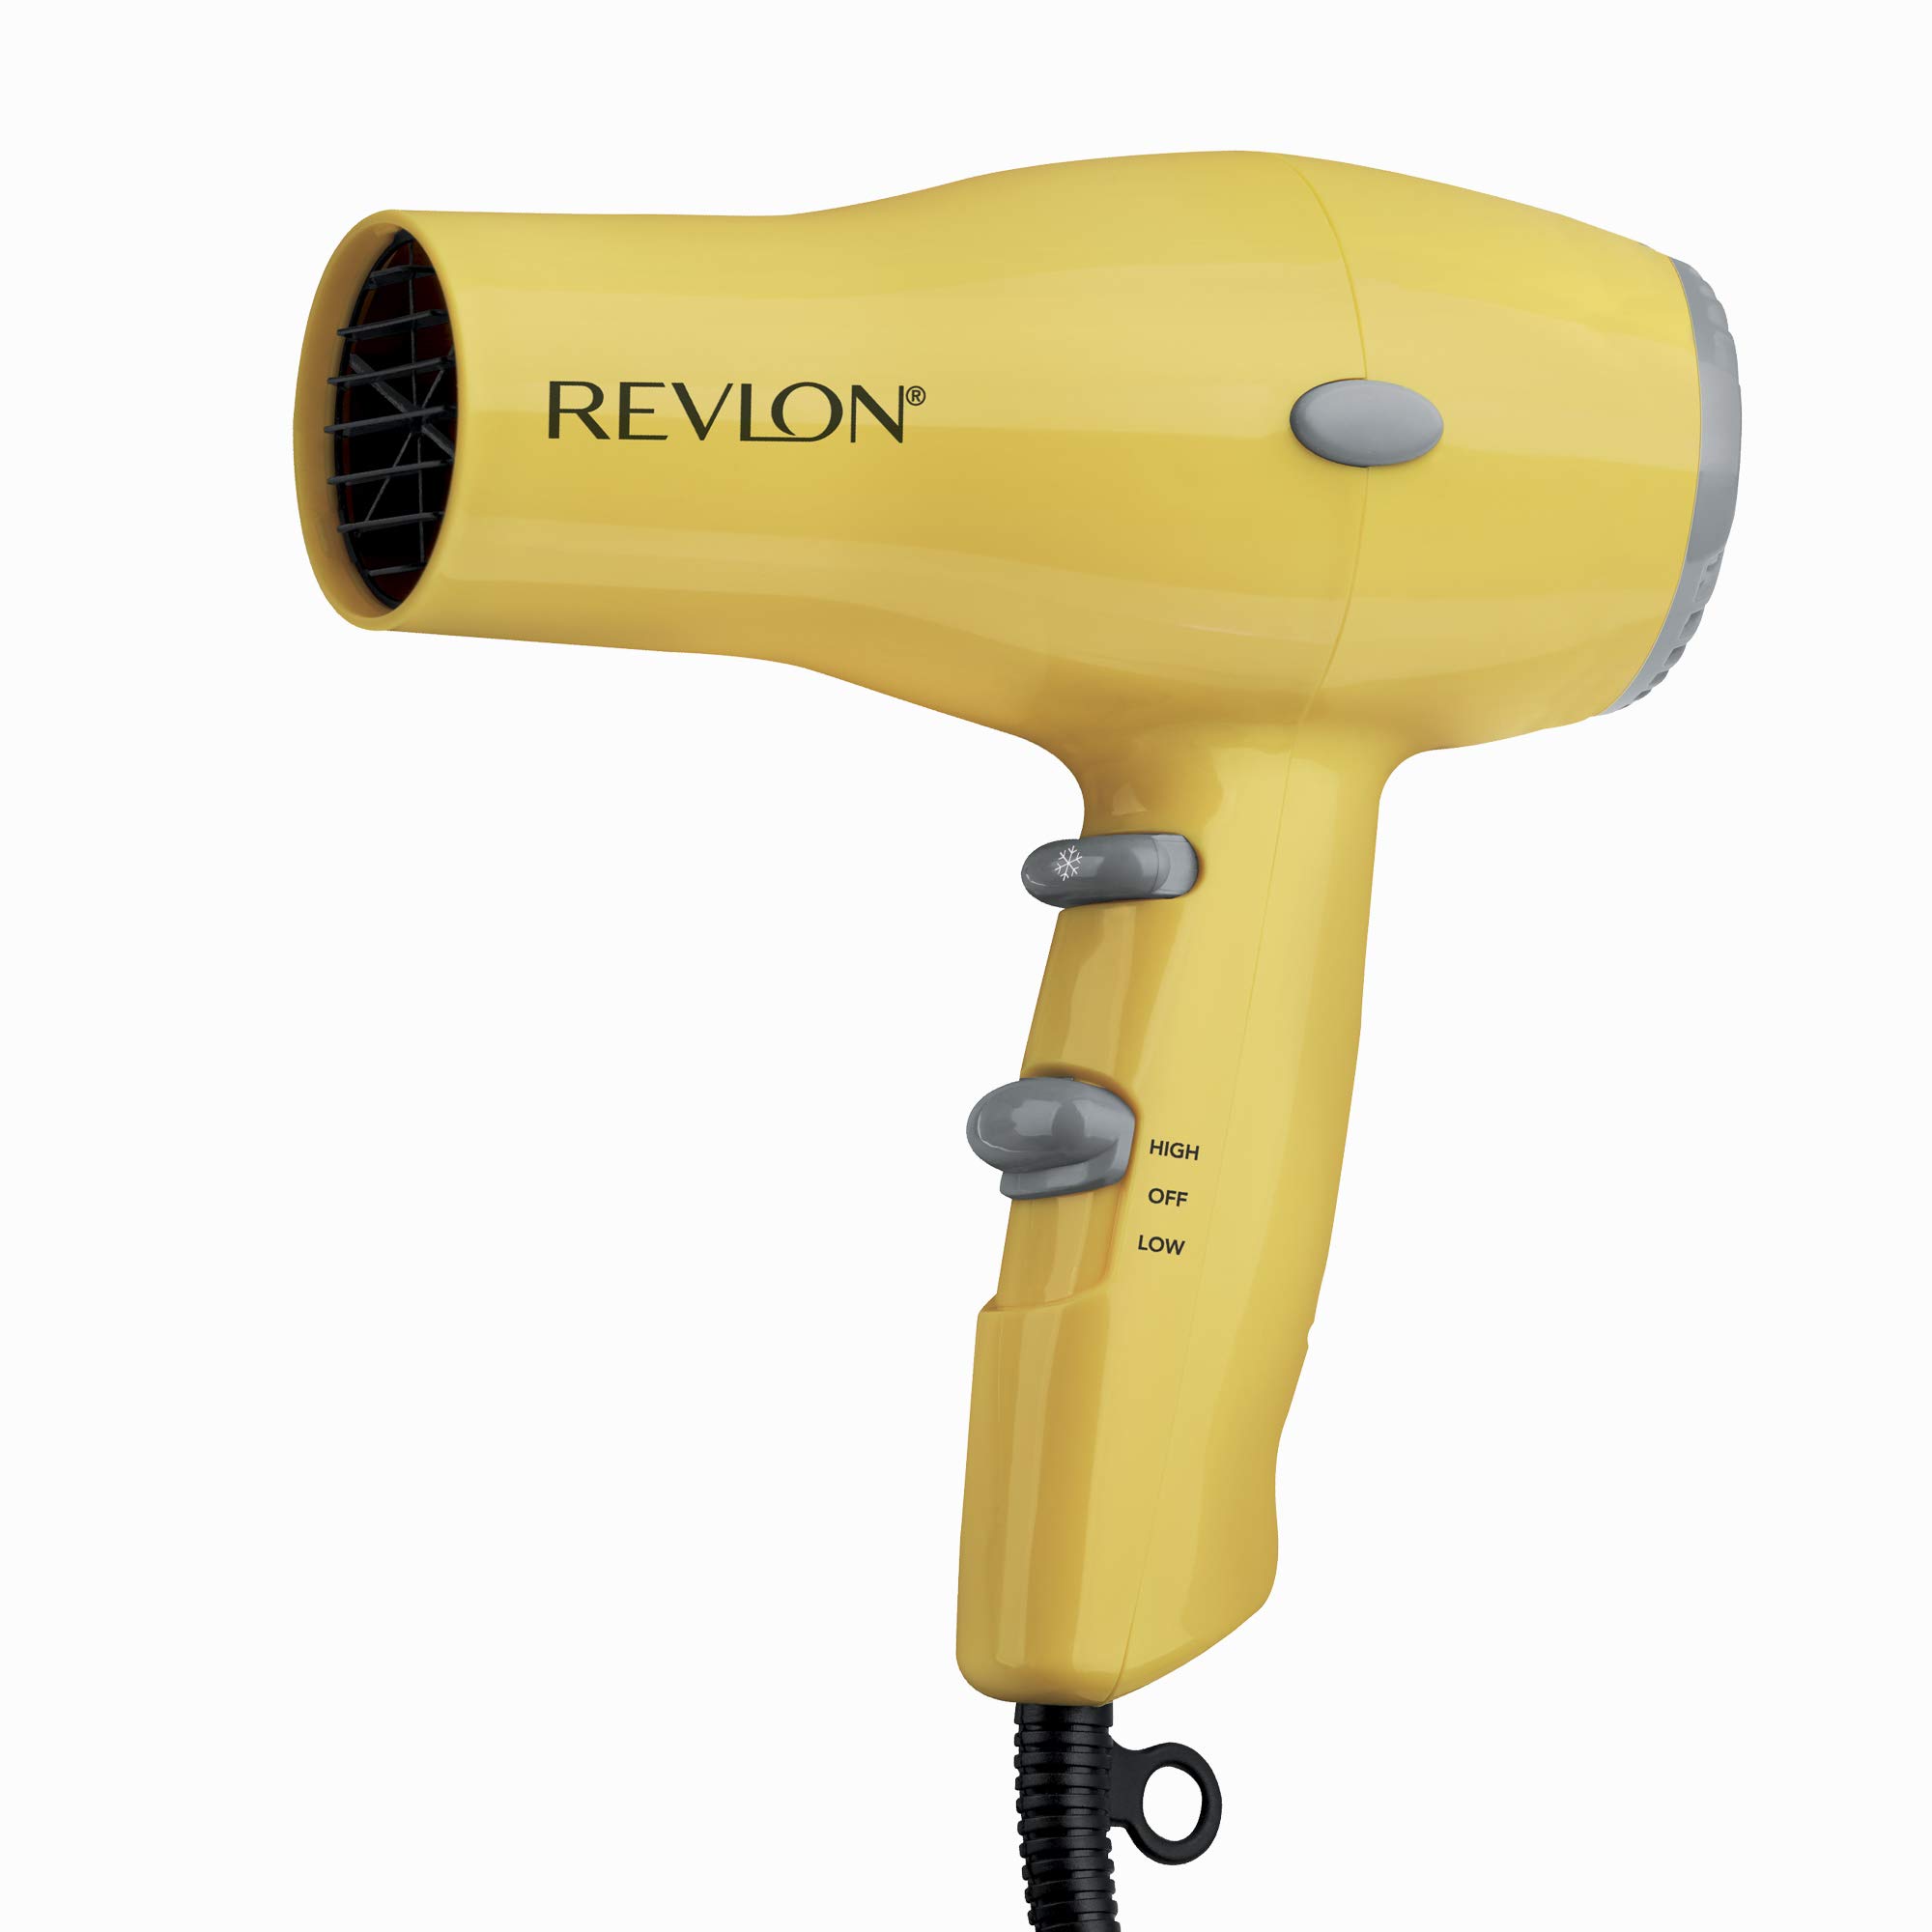 Revlon Compact Hair Dryer (1875-watt, Yellow) $8 + Free Shipping w/ Prime or on $35+